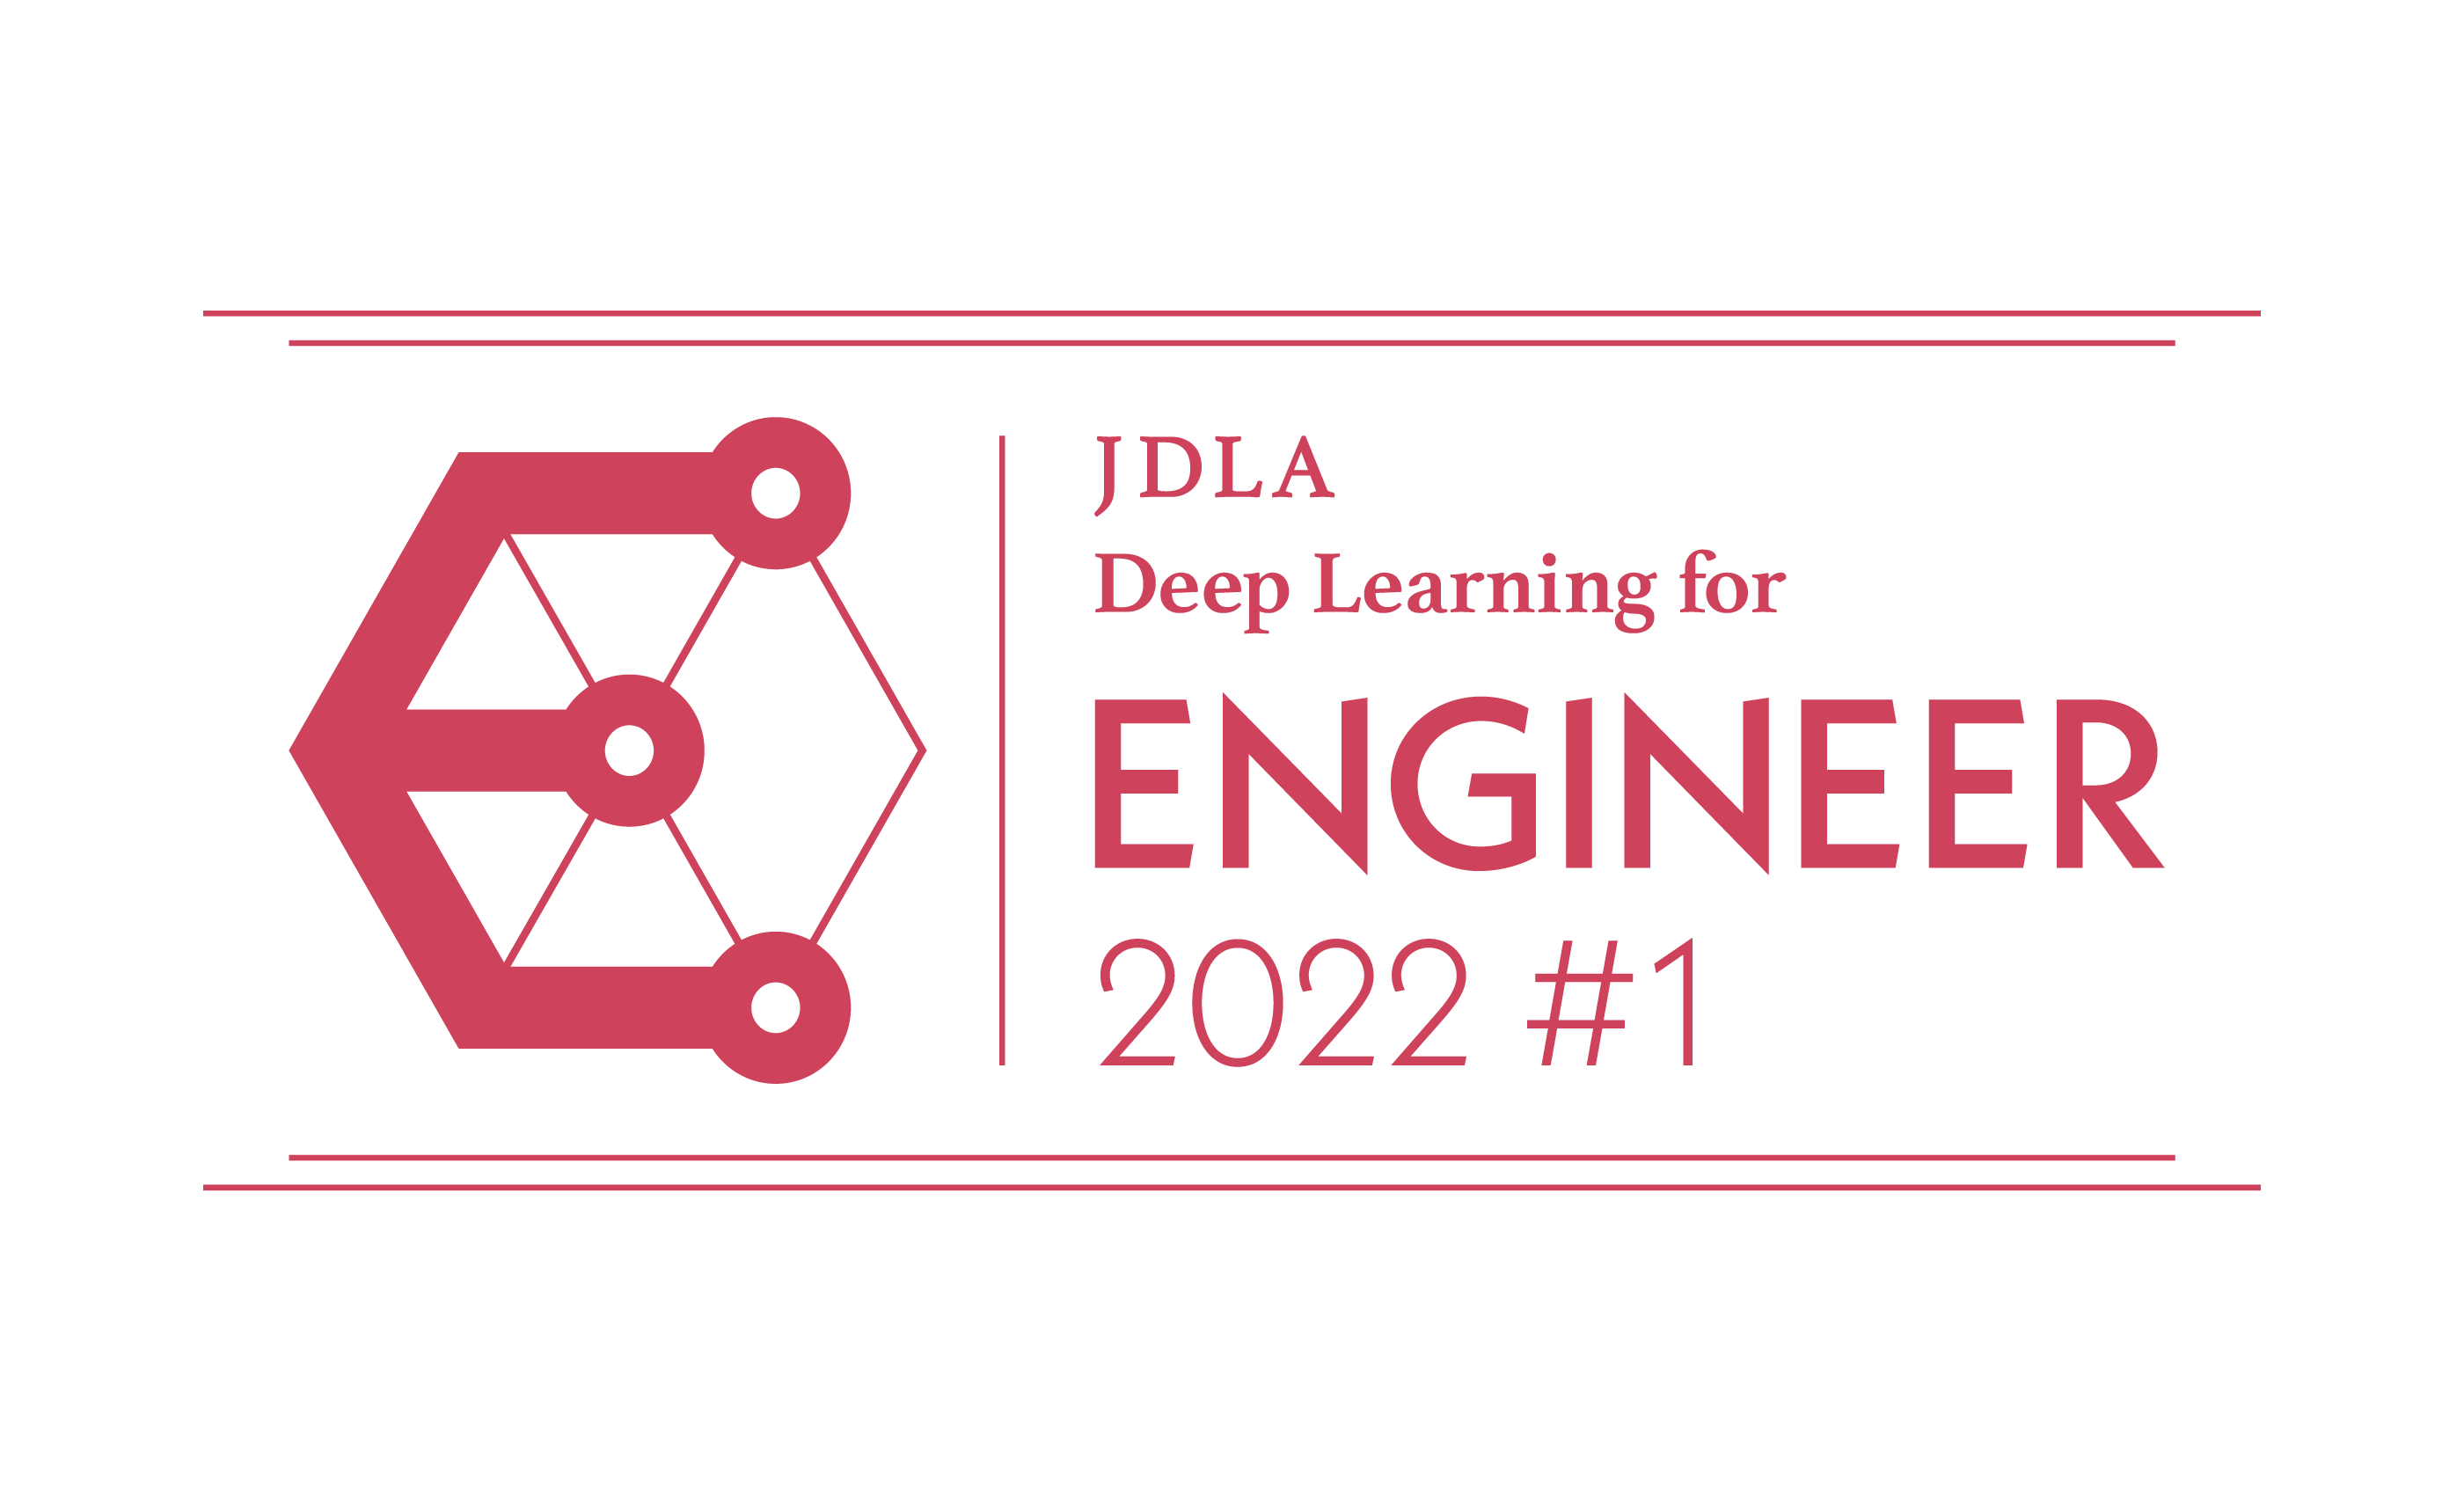 JDLA Deep Learning for ENGINEER 2022 #1